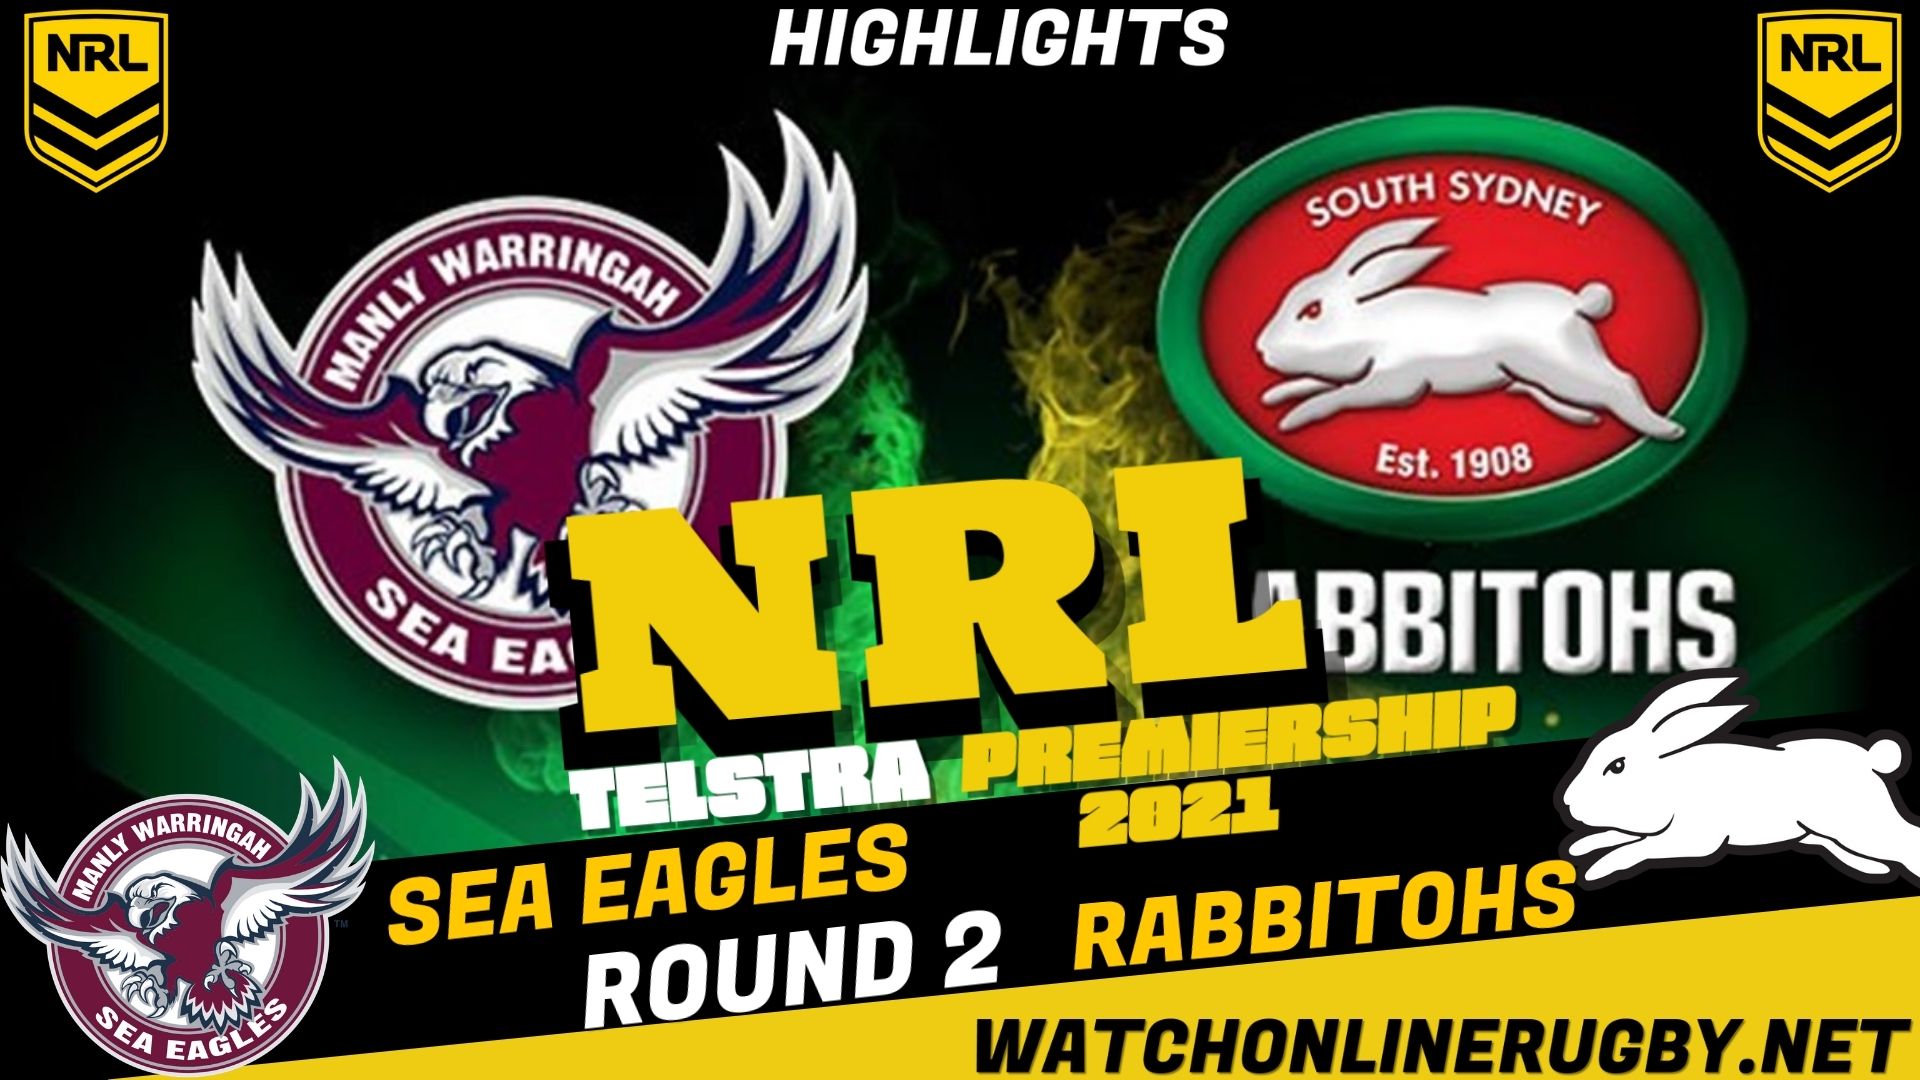 Sea Eagles Vs Rabbitohs Highlights RD 2 NRL Rugby